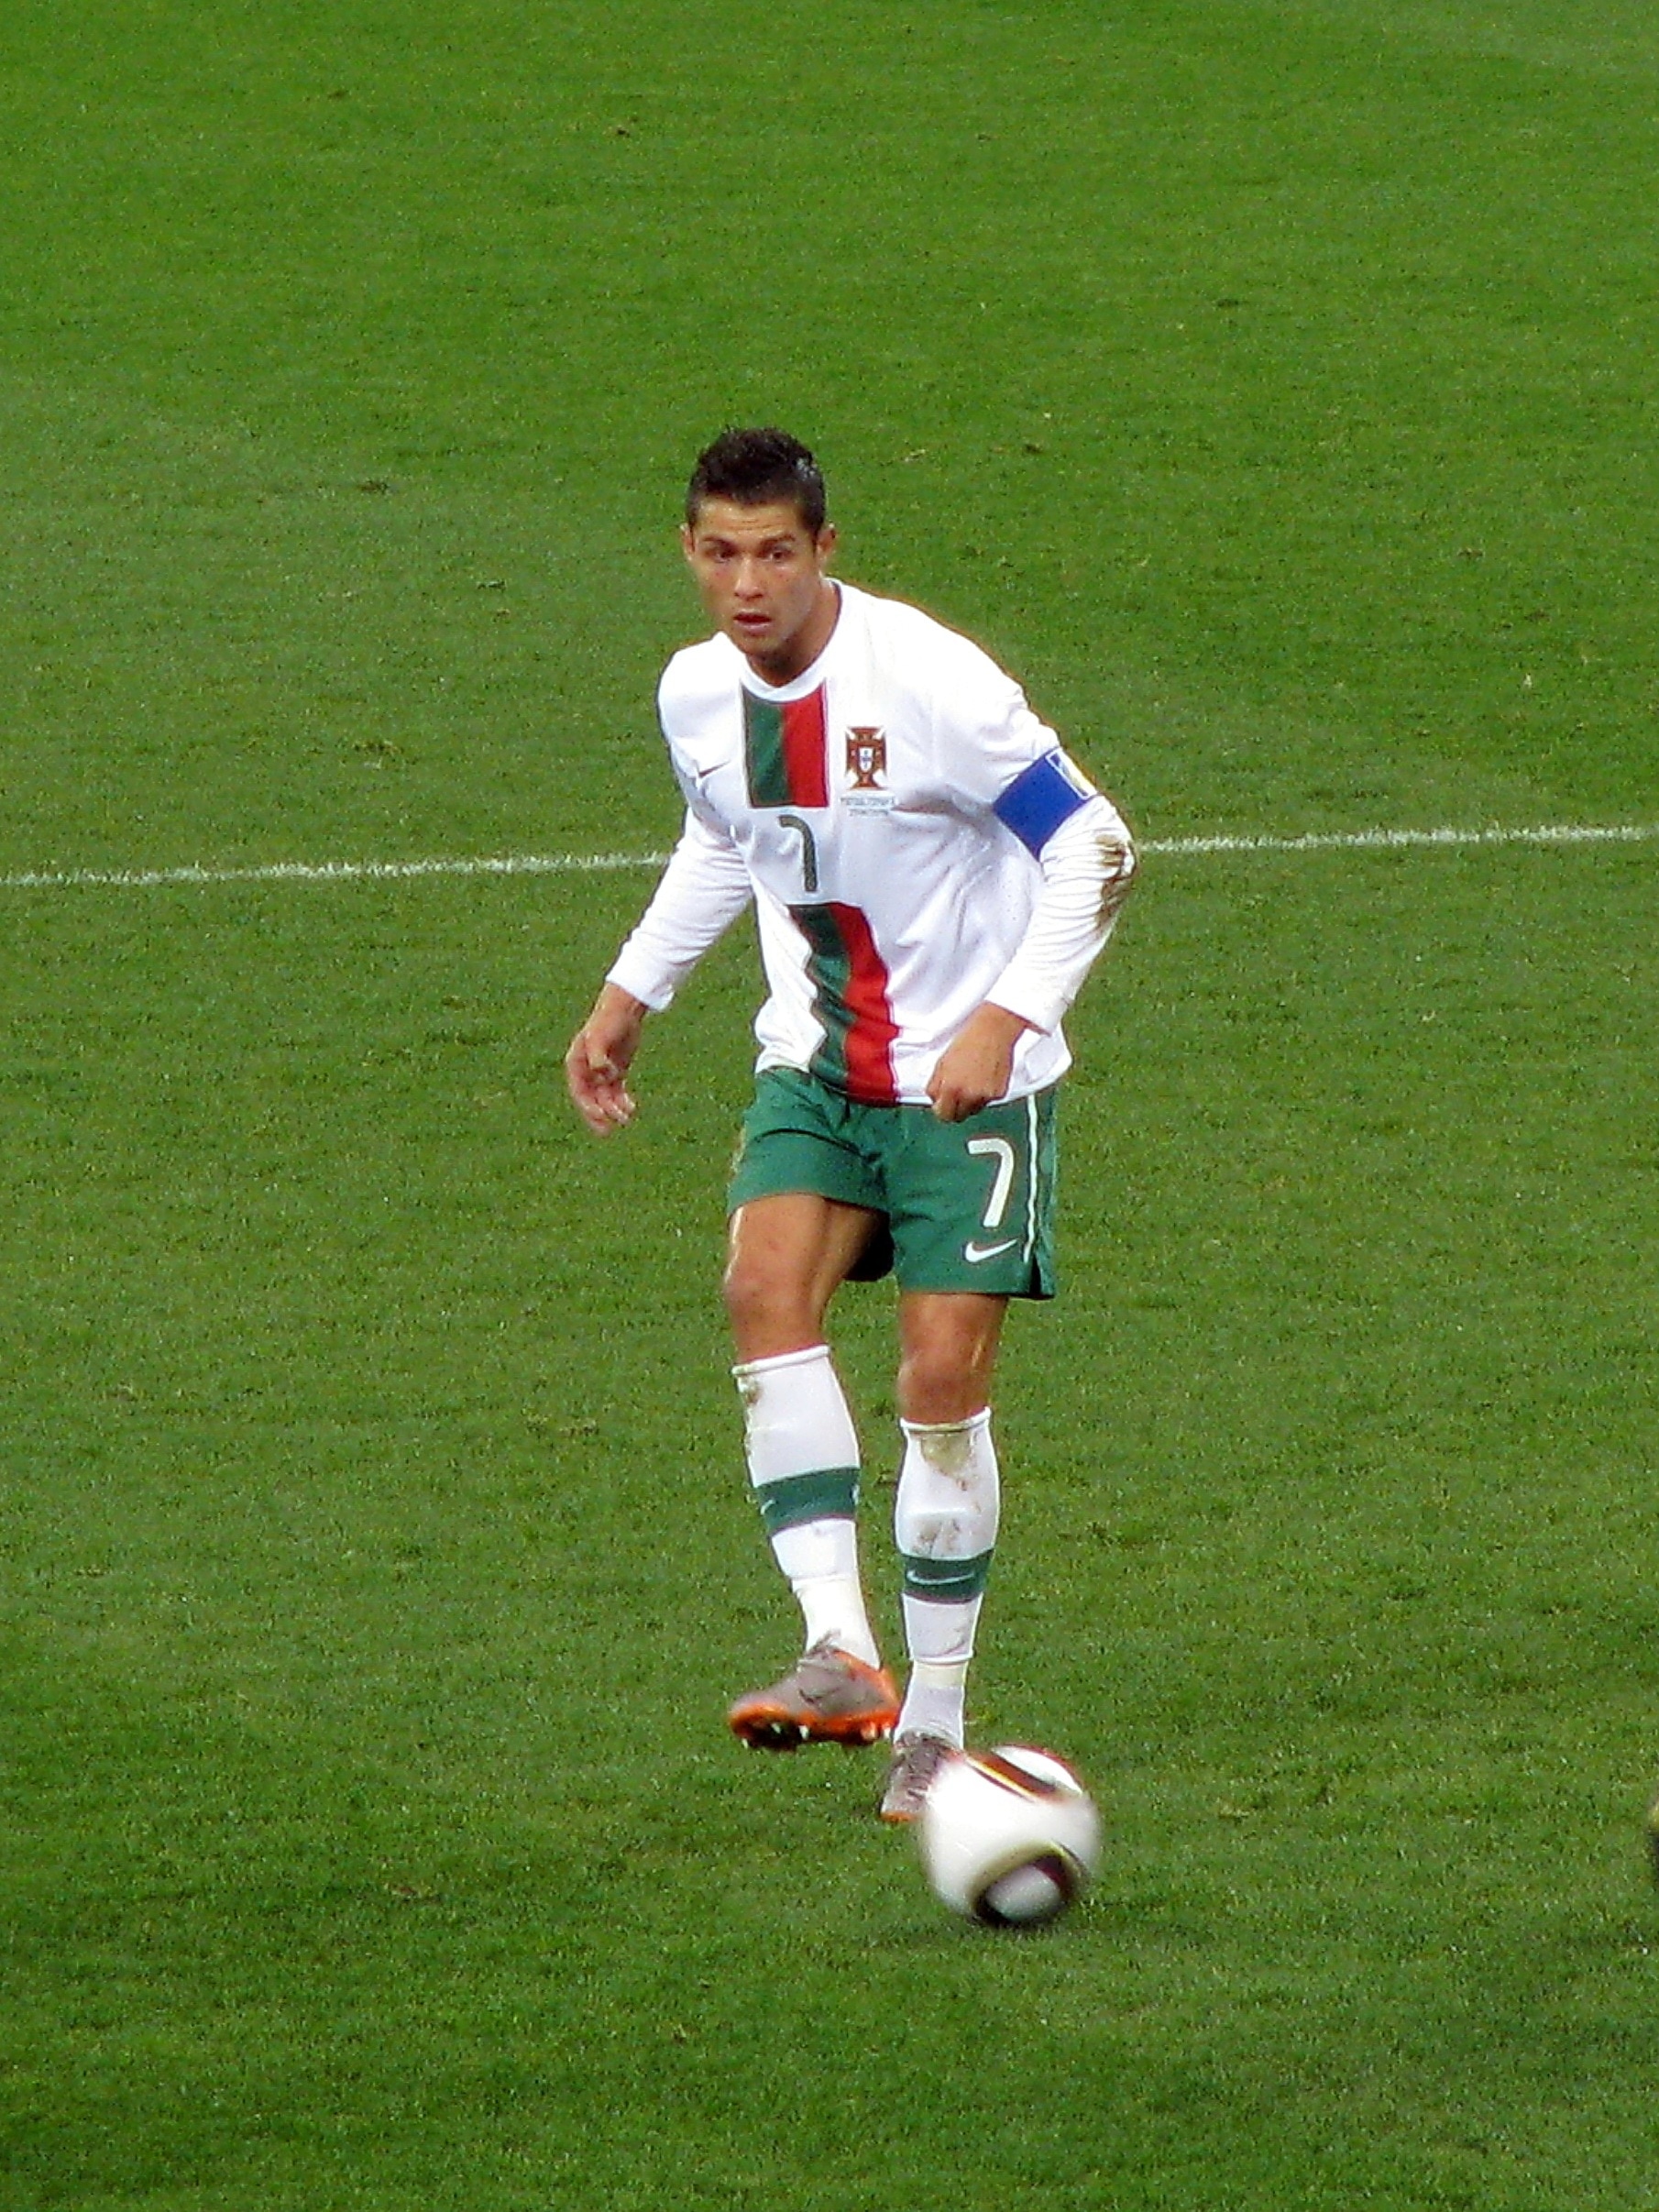 men's white green and red soccer uniform